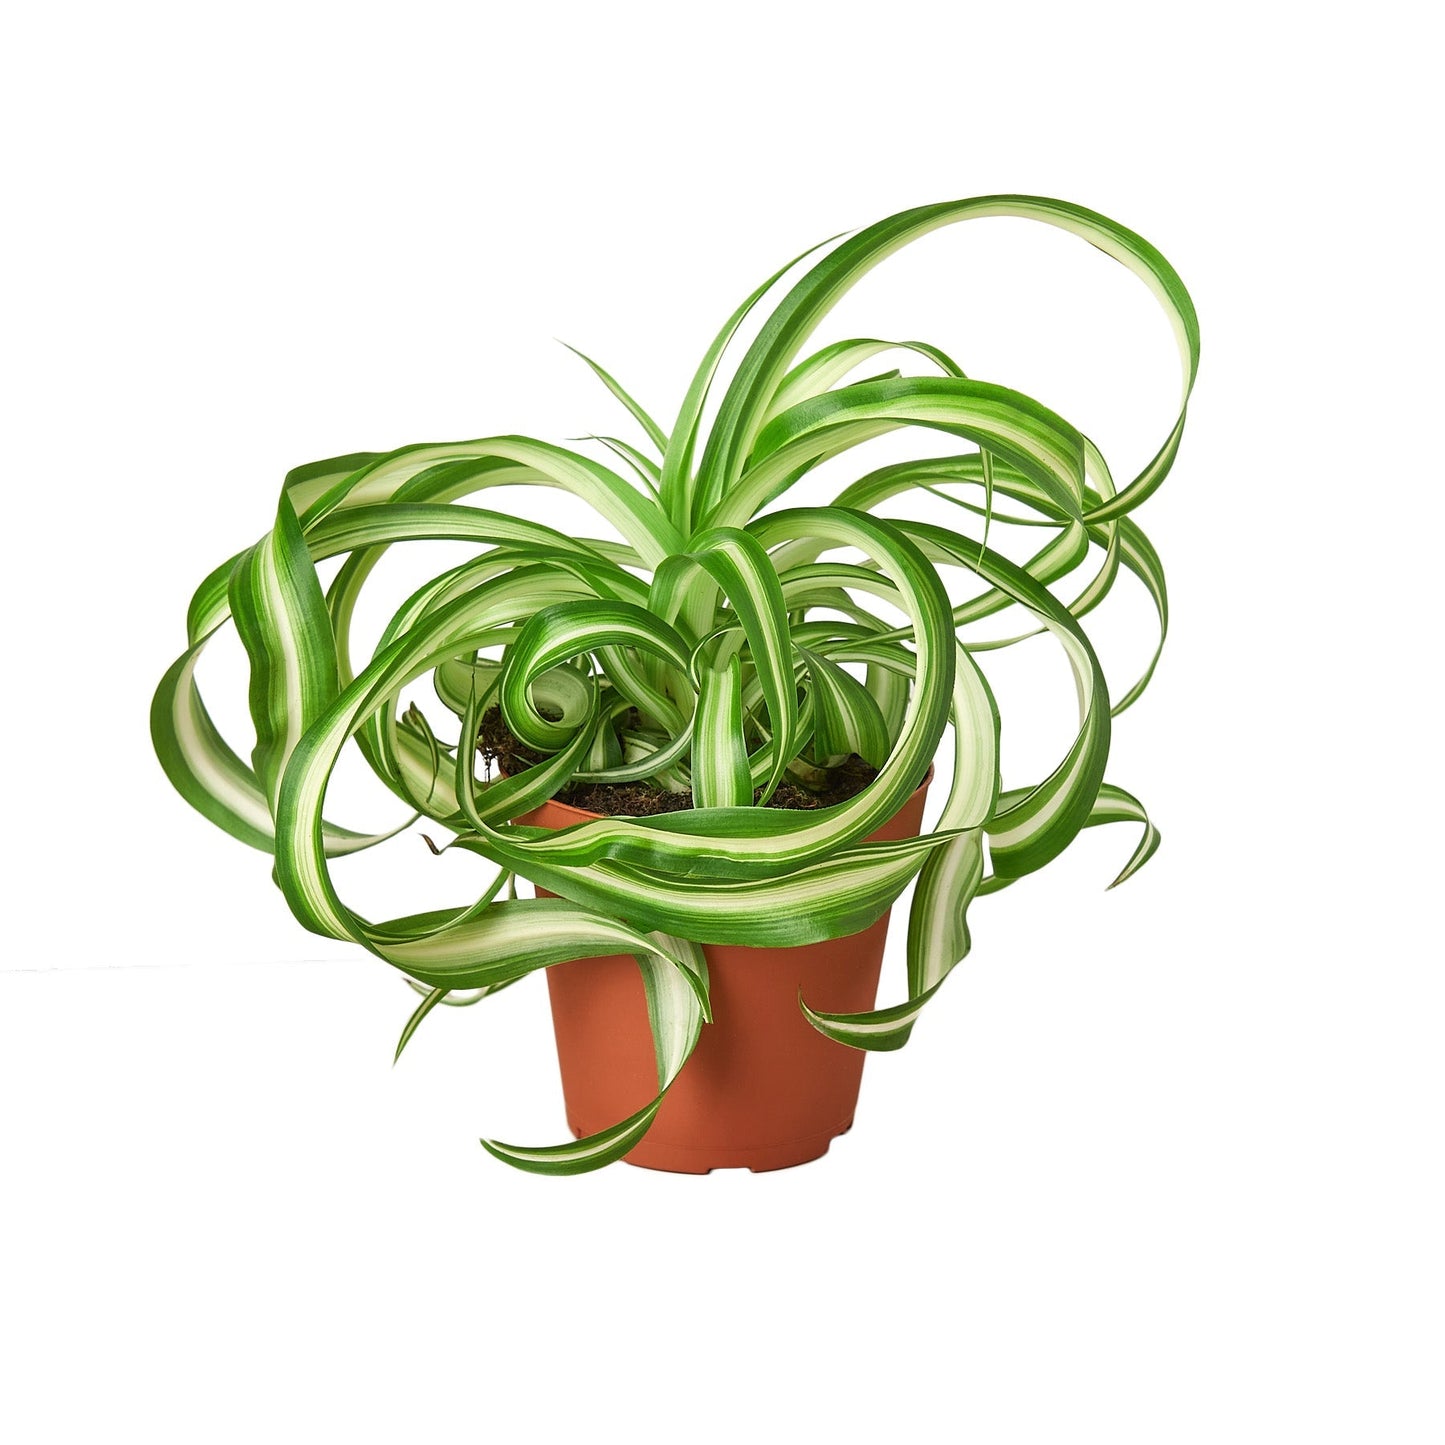 Spider Plant 'Bonnie' - 4" Pot - NURSERY POT ONLY